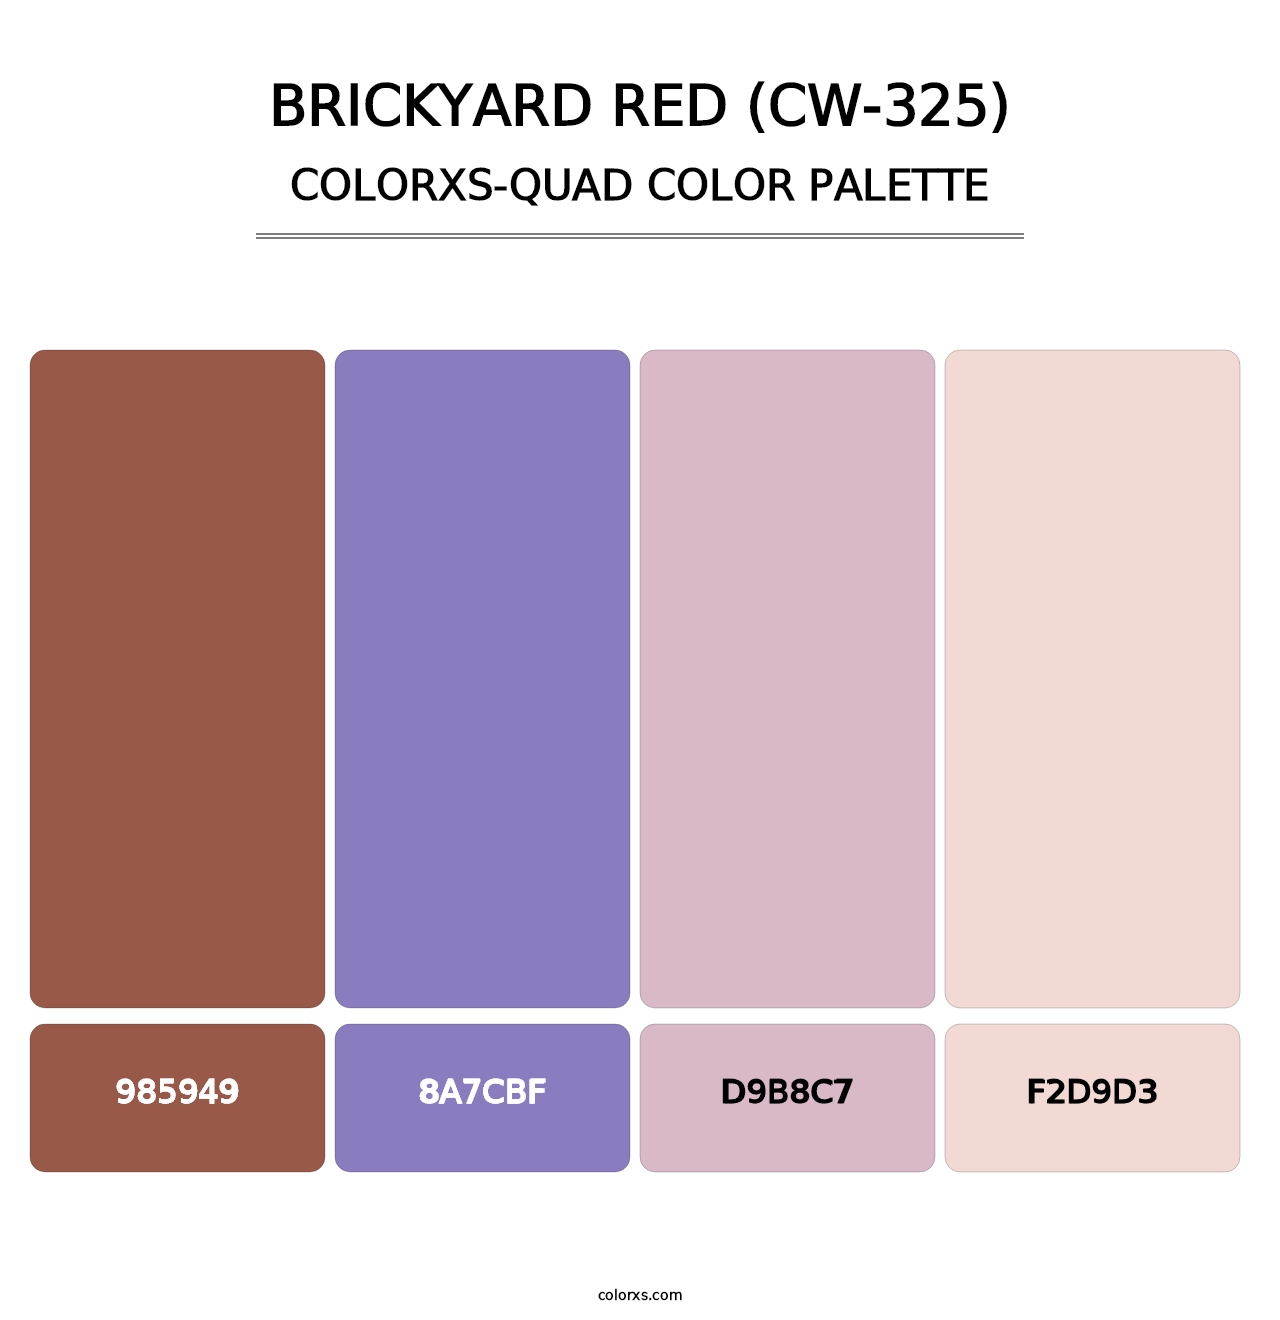 Brickyard Red (CW-325) - Colorxs Quad Palette